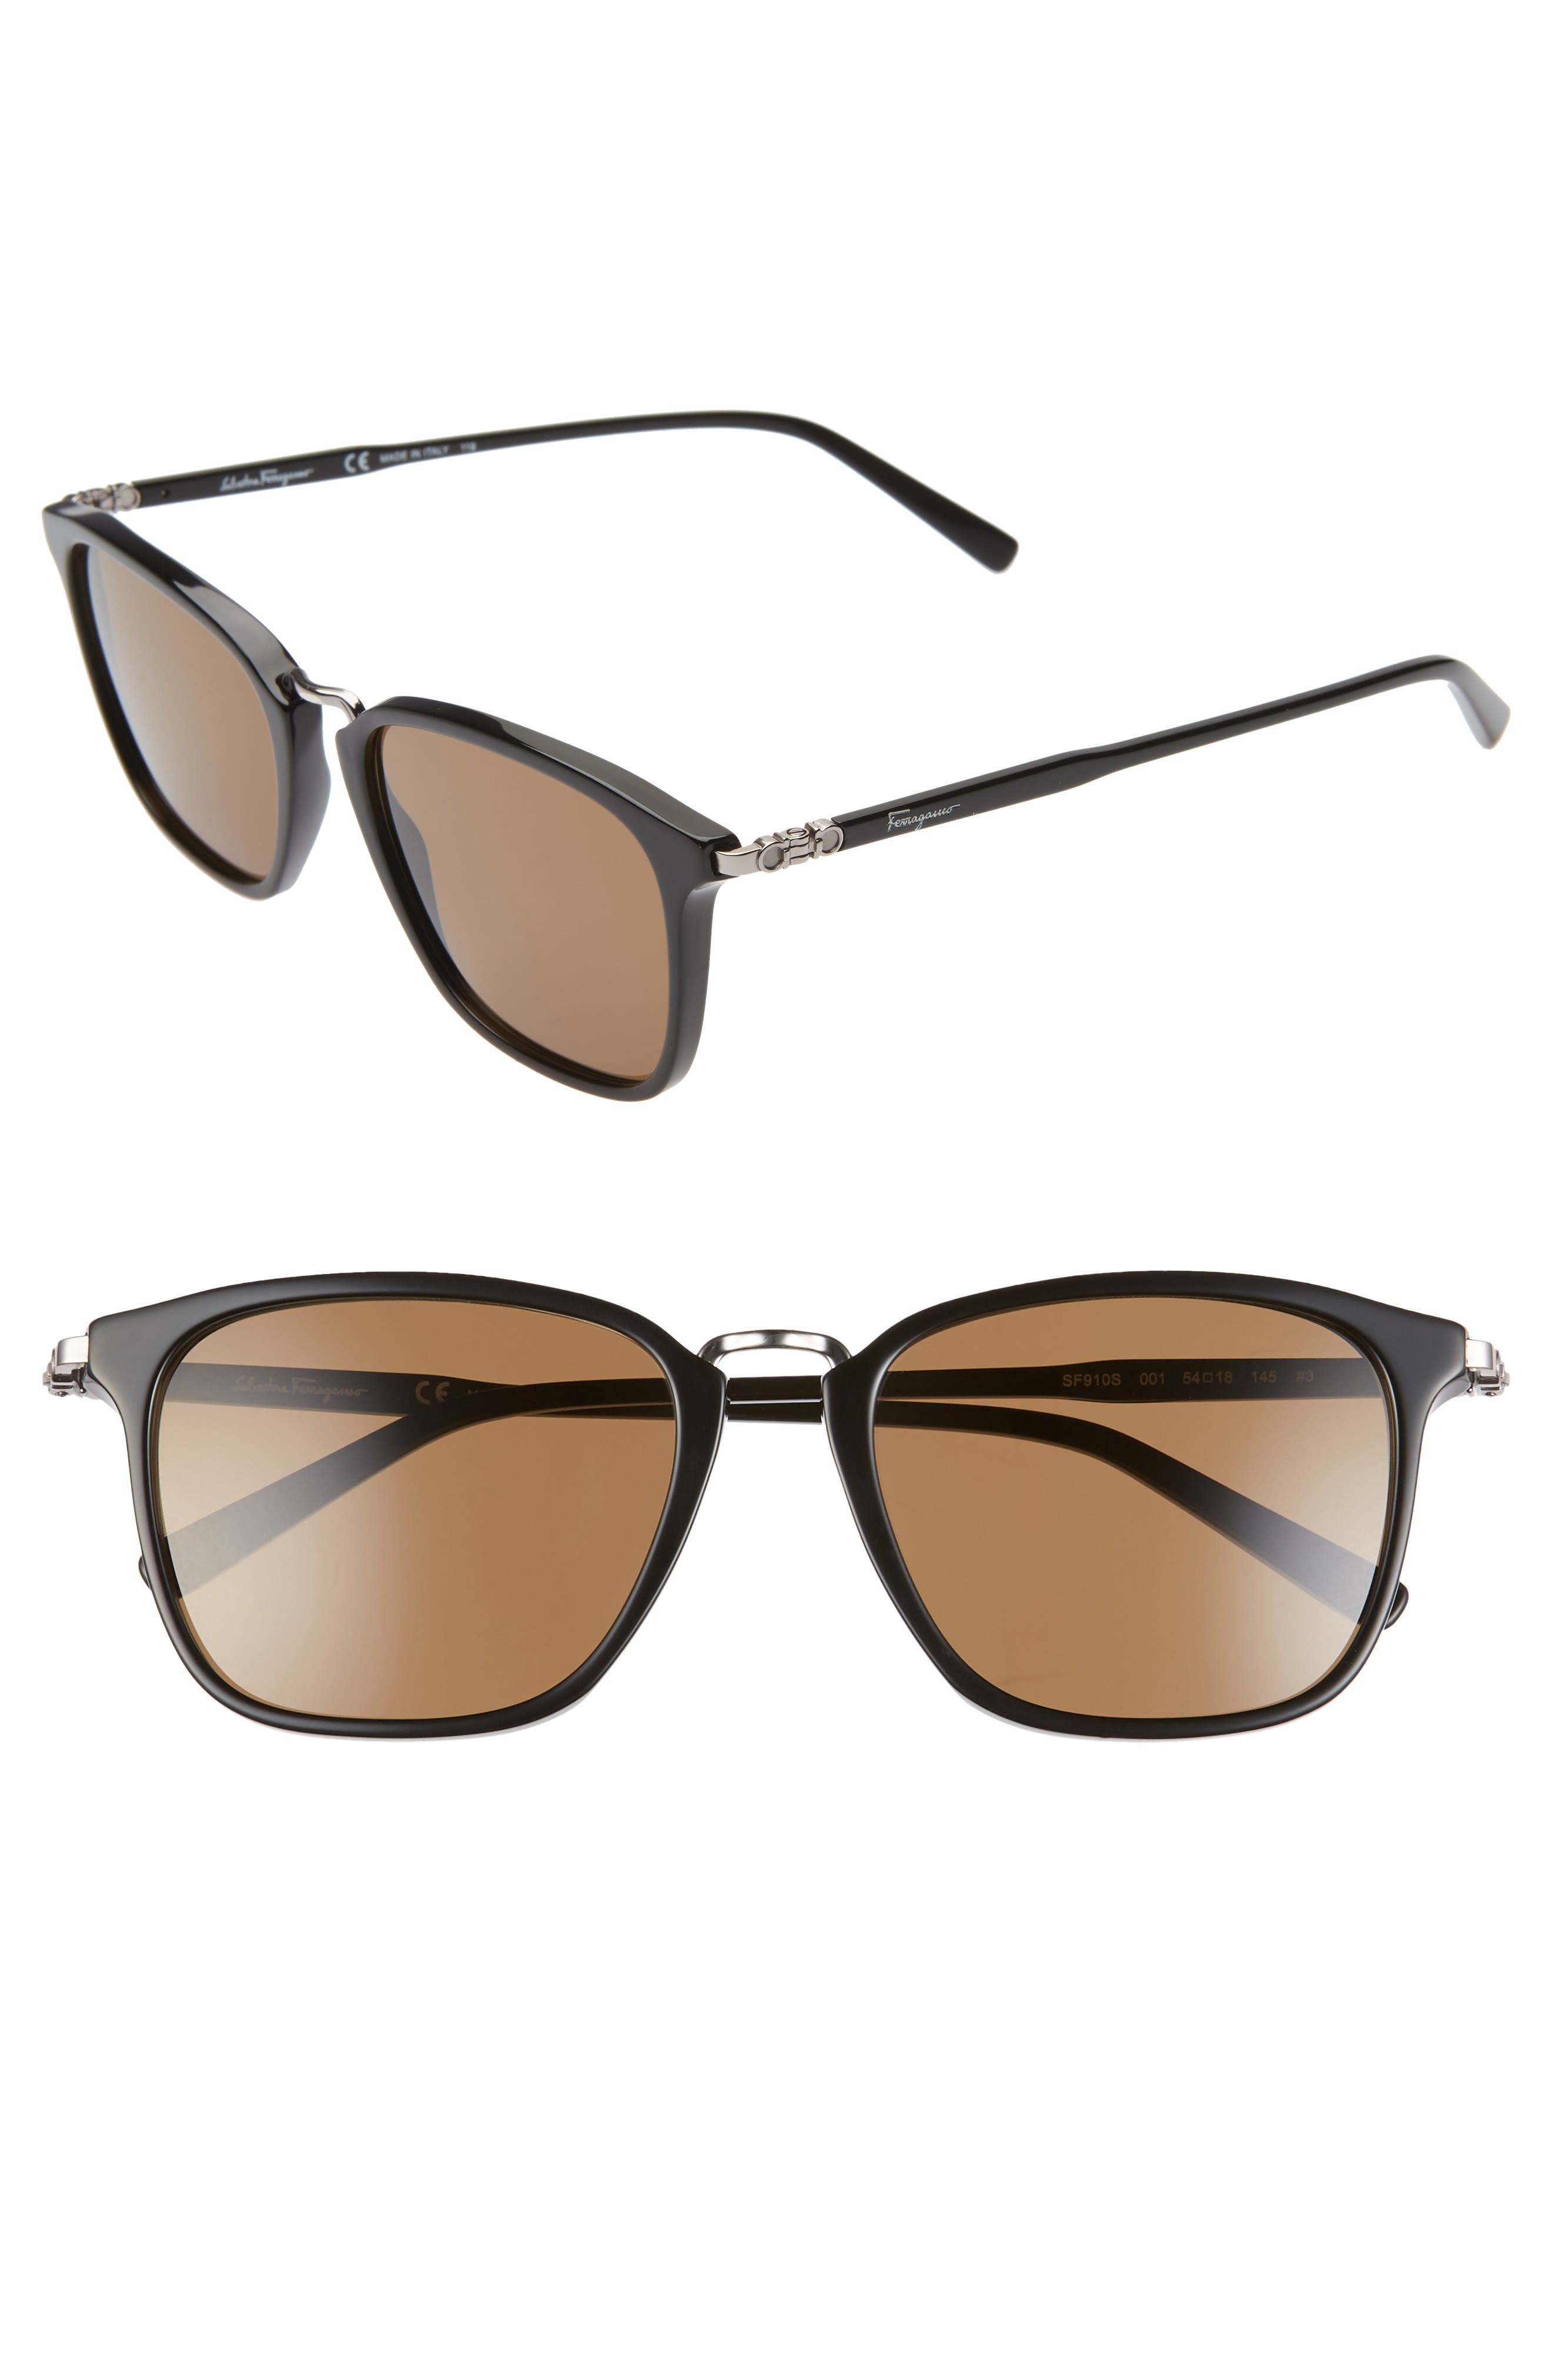 Salvatore Ferragamo 54mm Square Sunglasses in Black at Nordstrom